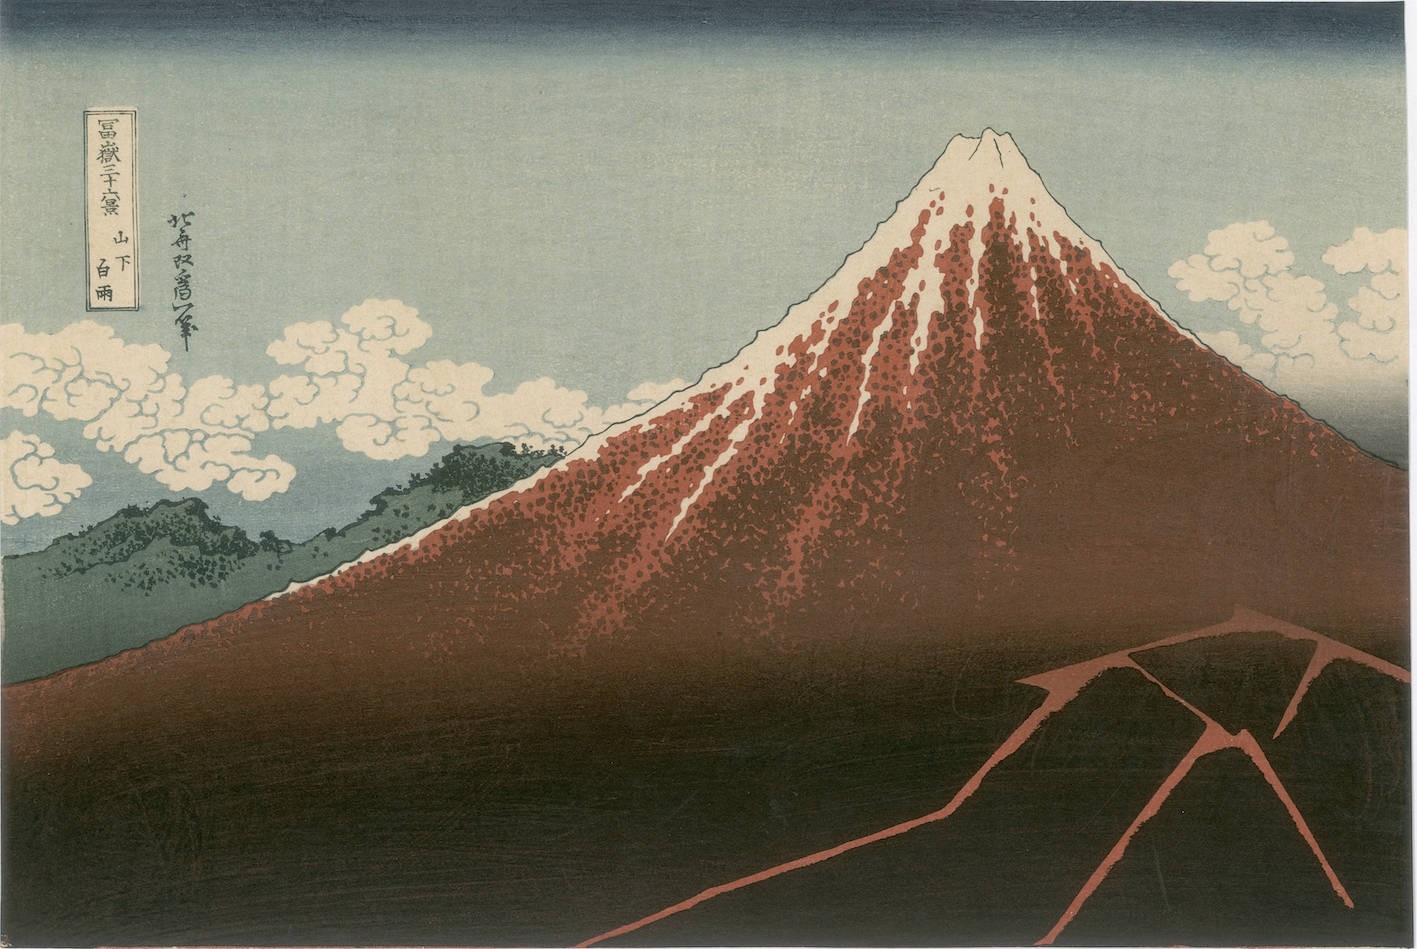 Thunderstorm Beneath the Summit Japanese Woodblock Print Ukiyo-e by Hokusai A4 Photo Print on a Mount